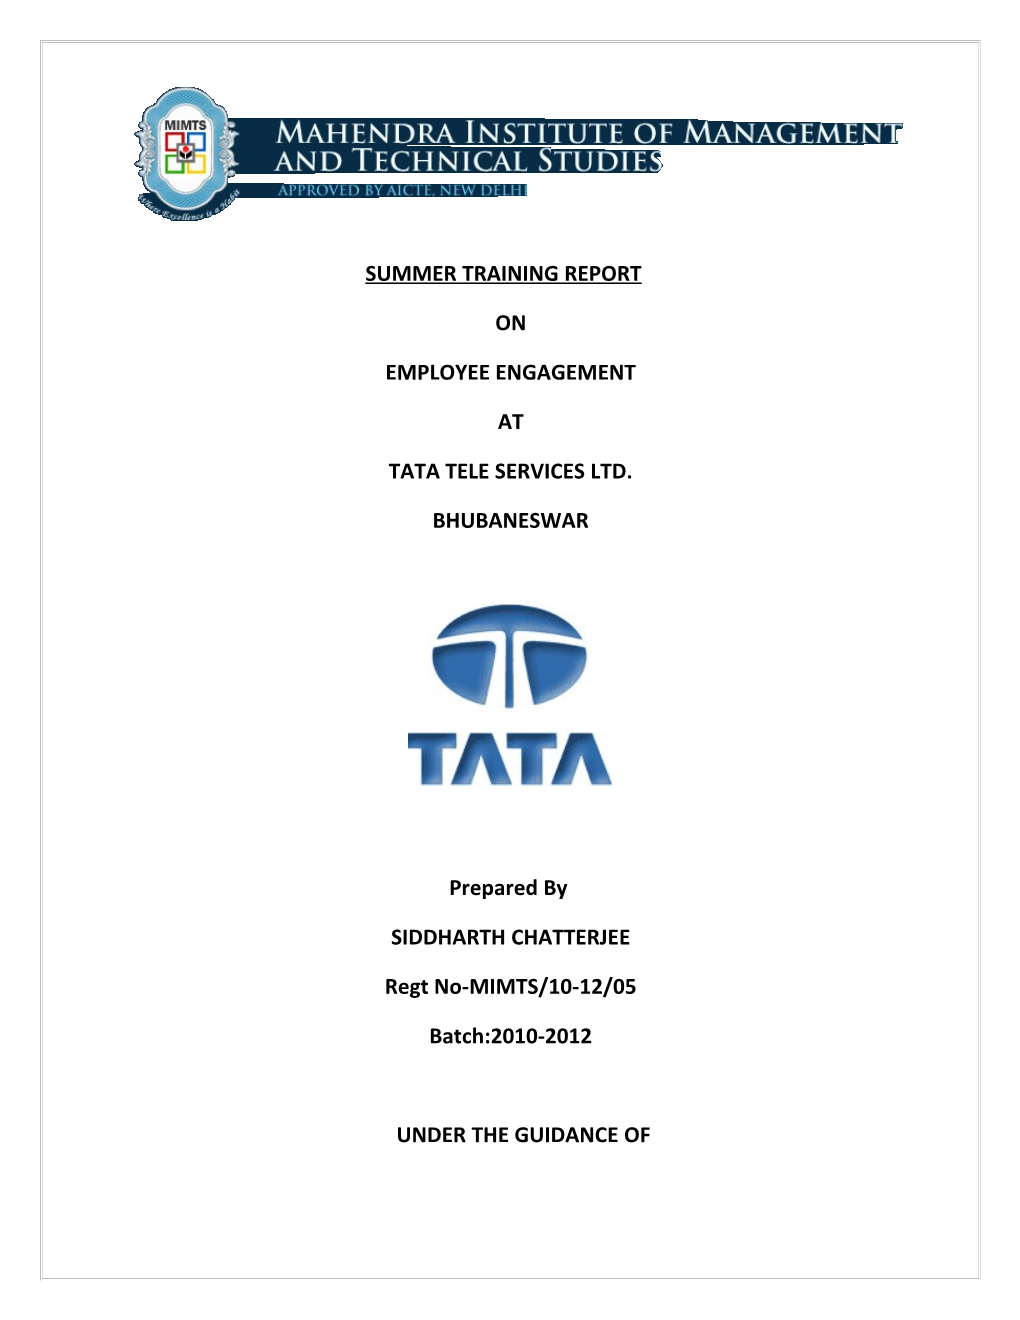 Tata Tele Services Ltd